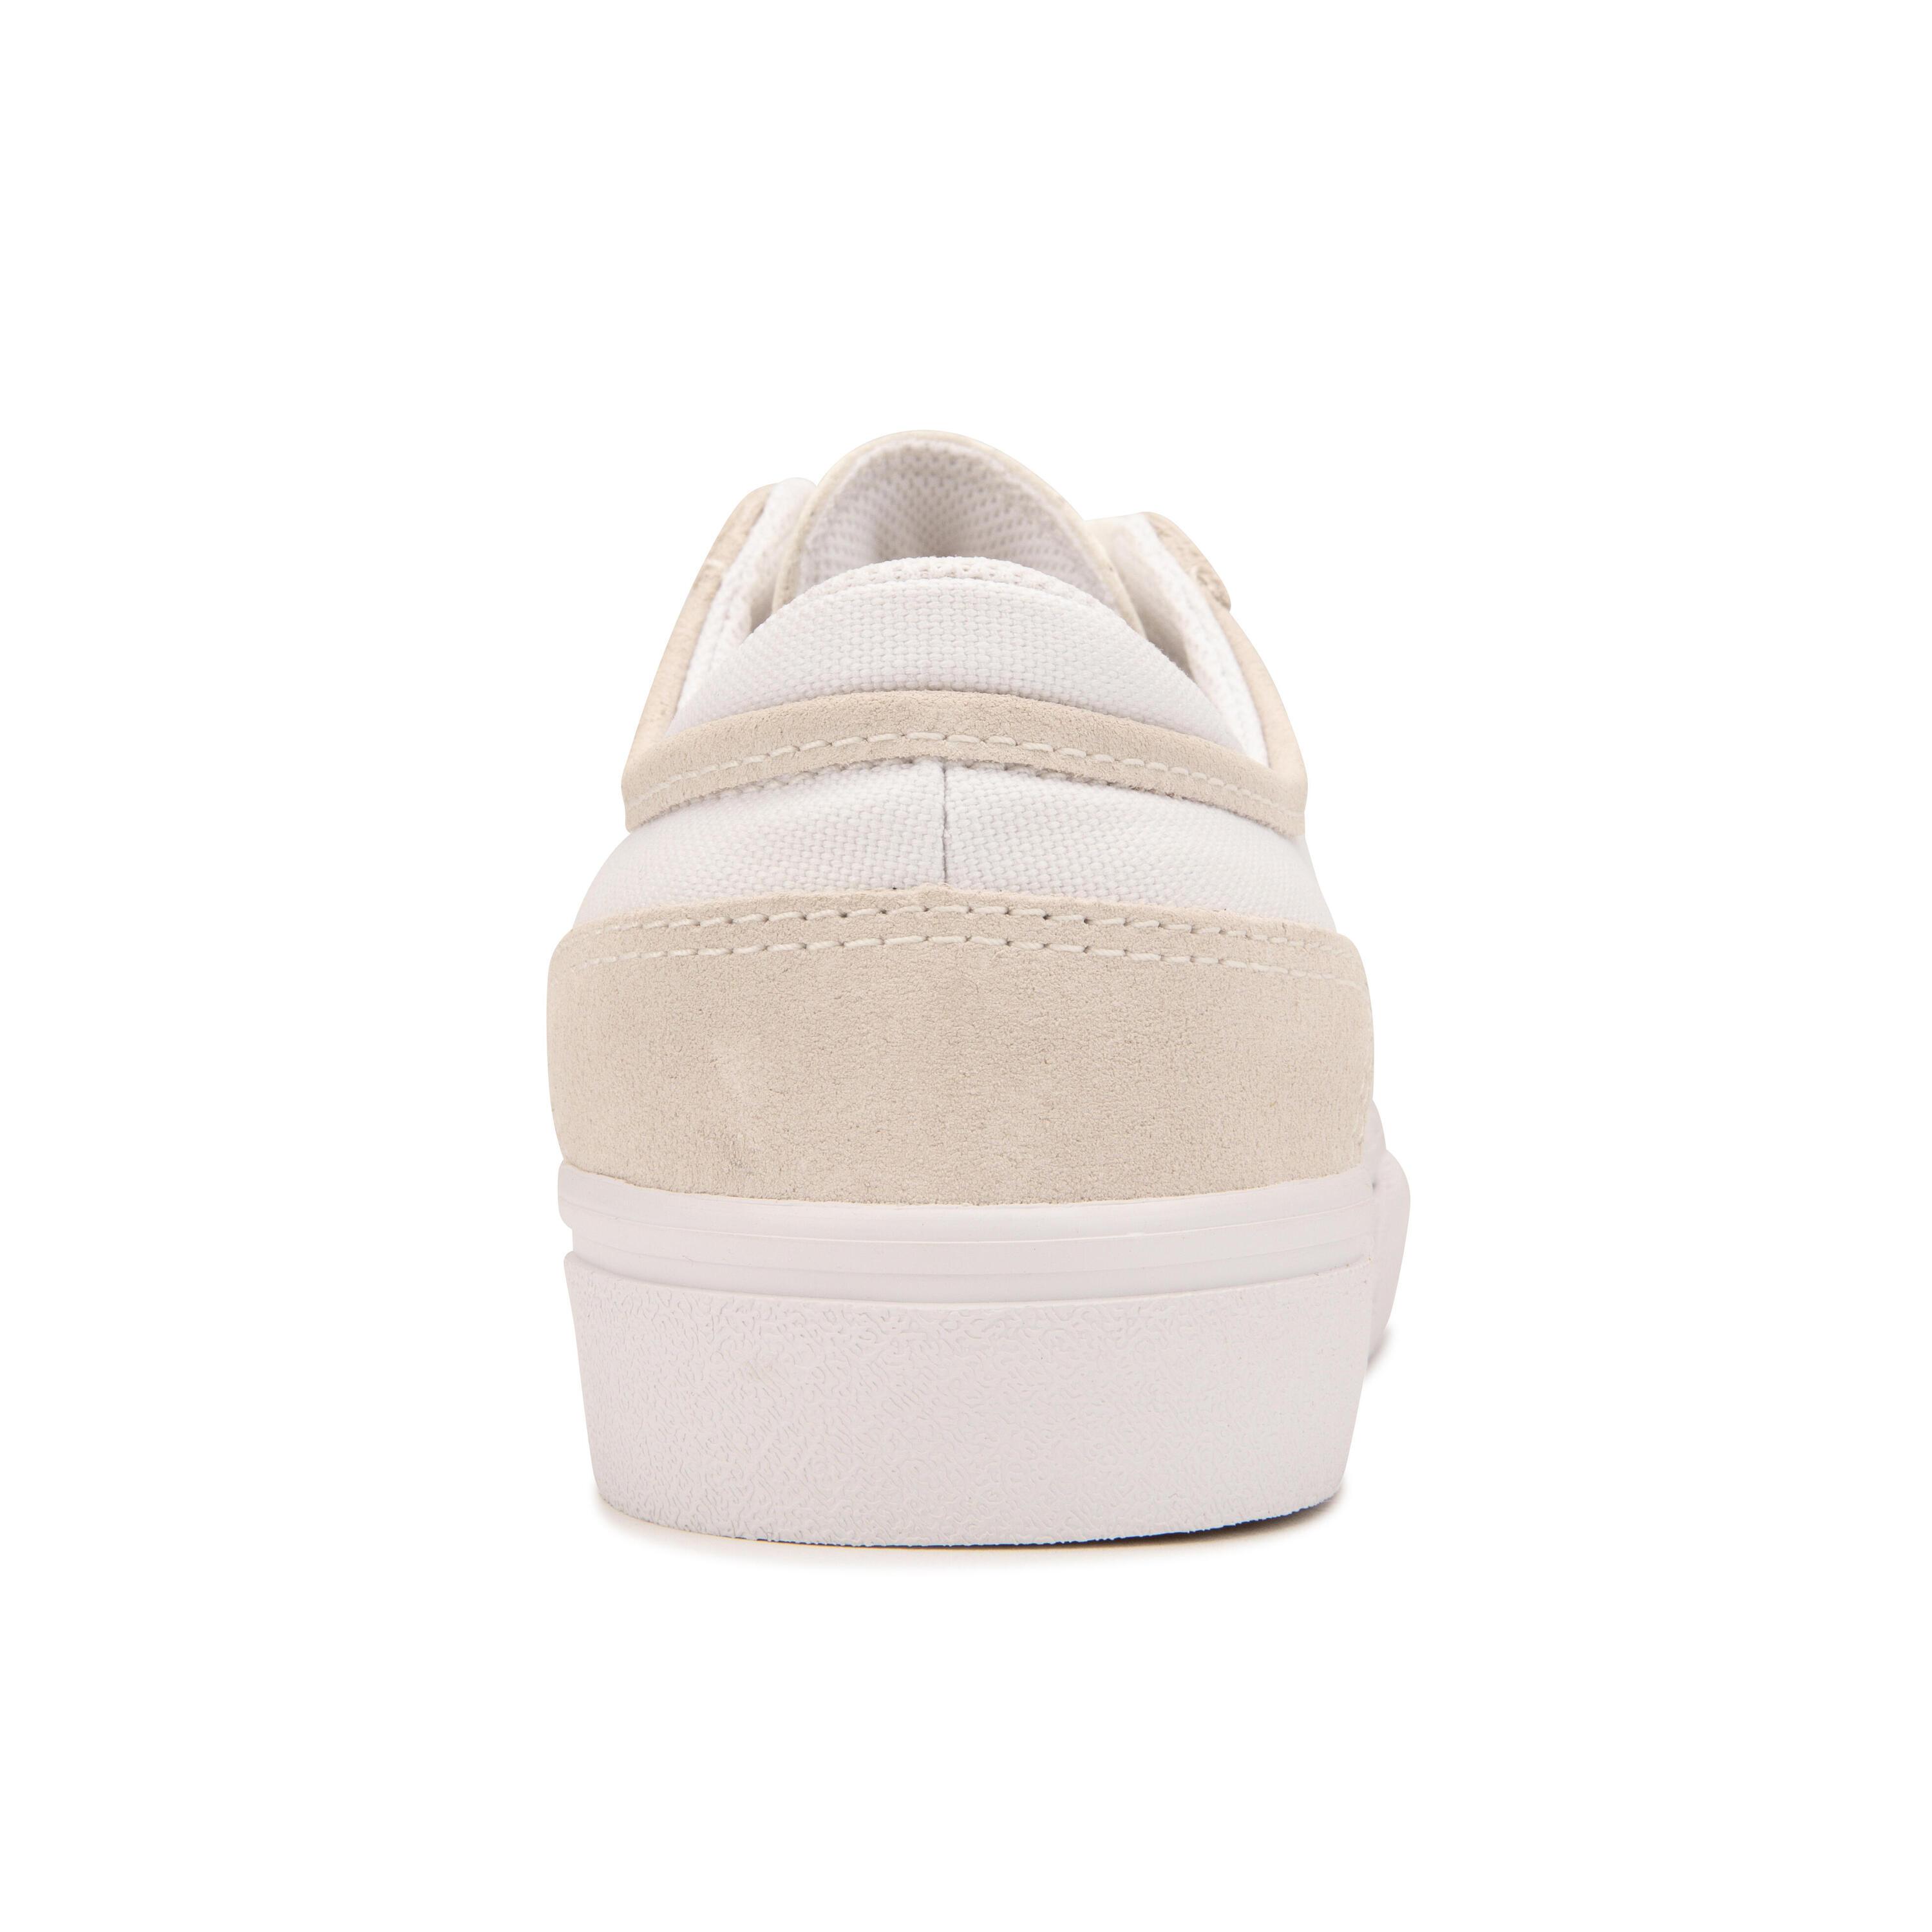 Adult Vulcanised Skate Shoes Vulca 500 II - White/White 8/17